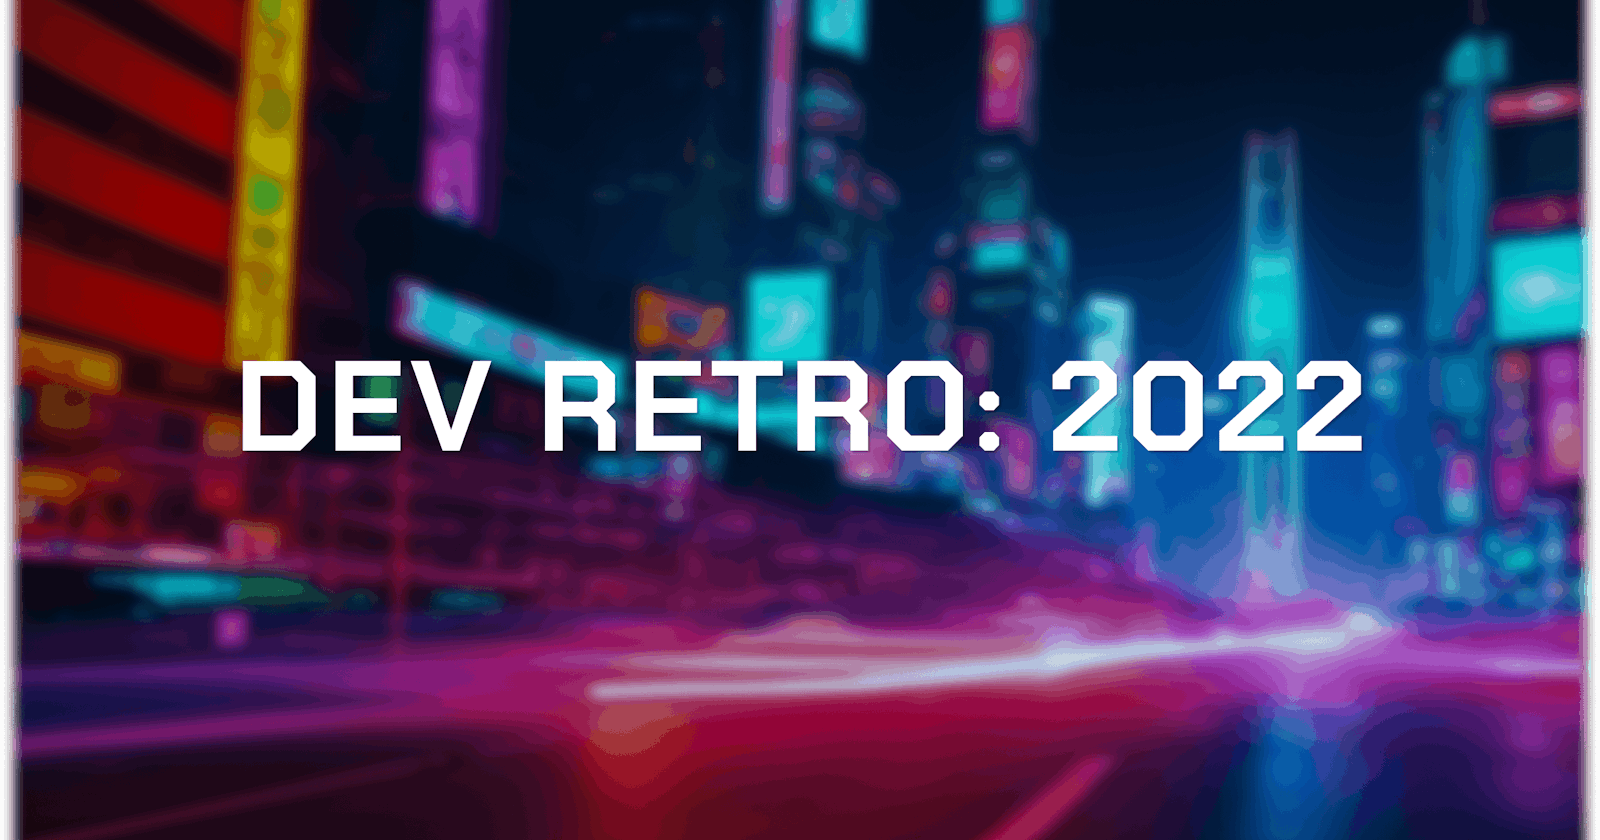 Dev Retro 2022: A Look Back at my Developer Journey in 2022